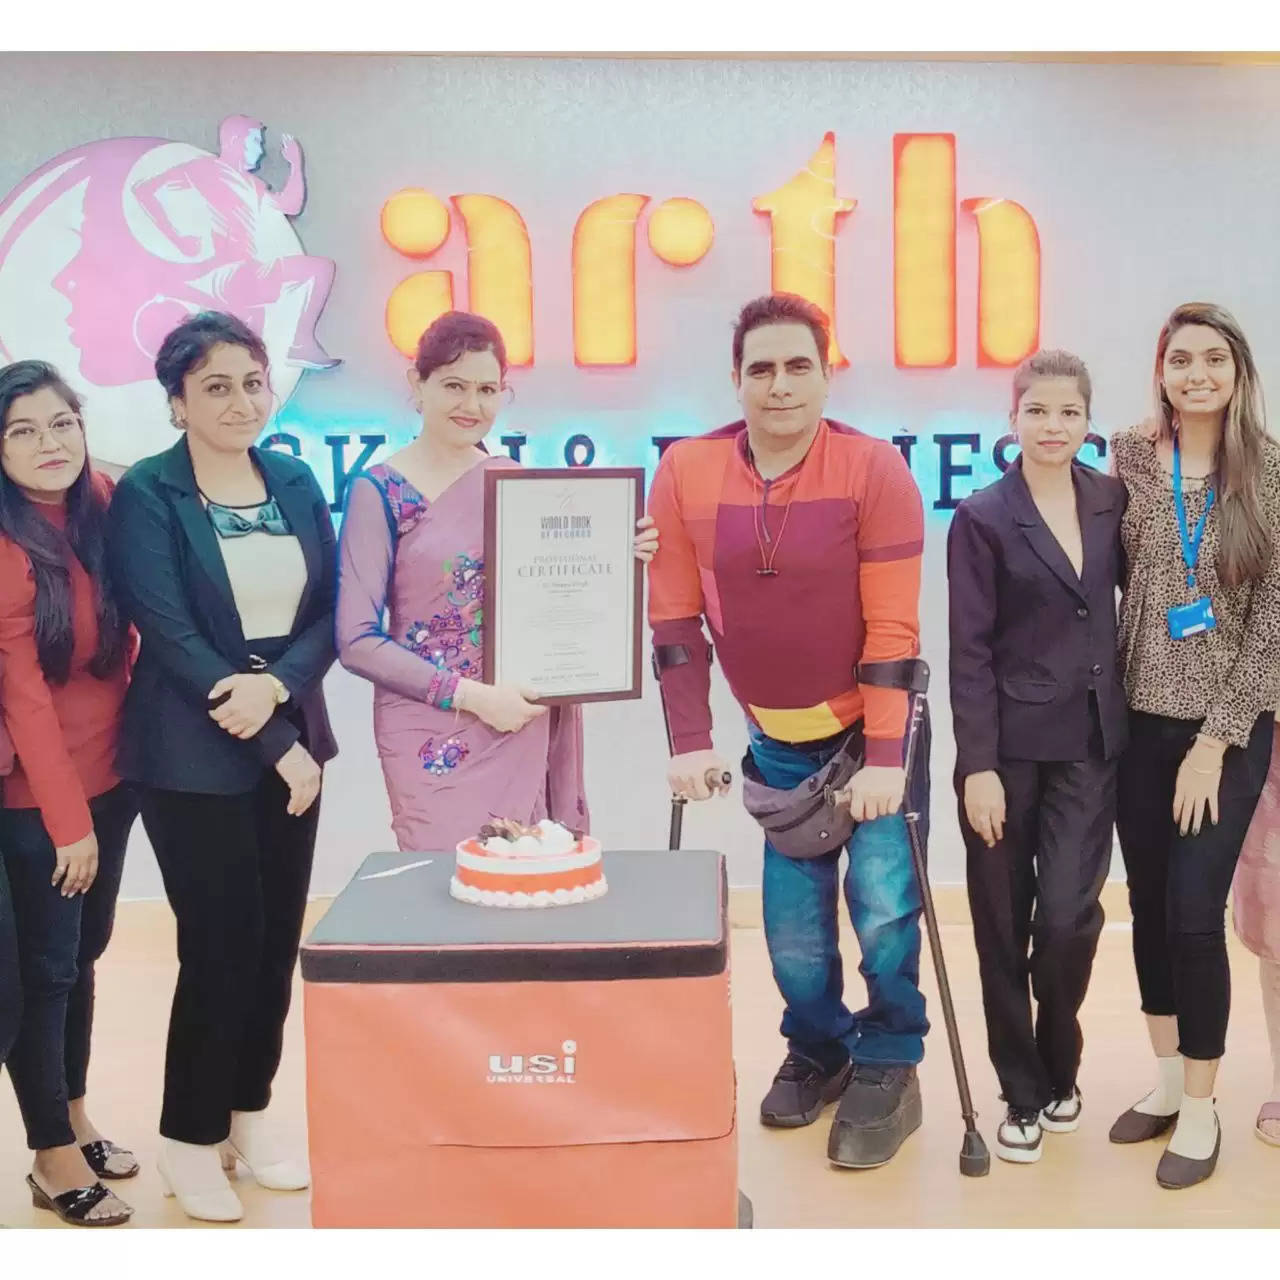 Arth Skin World Record for maximum treatments using latest laser technology Dr Deepa Singh Dr Arvinder Singh